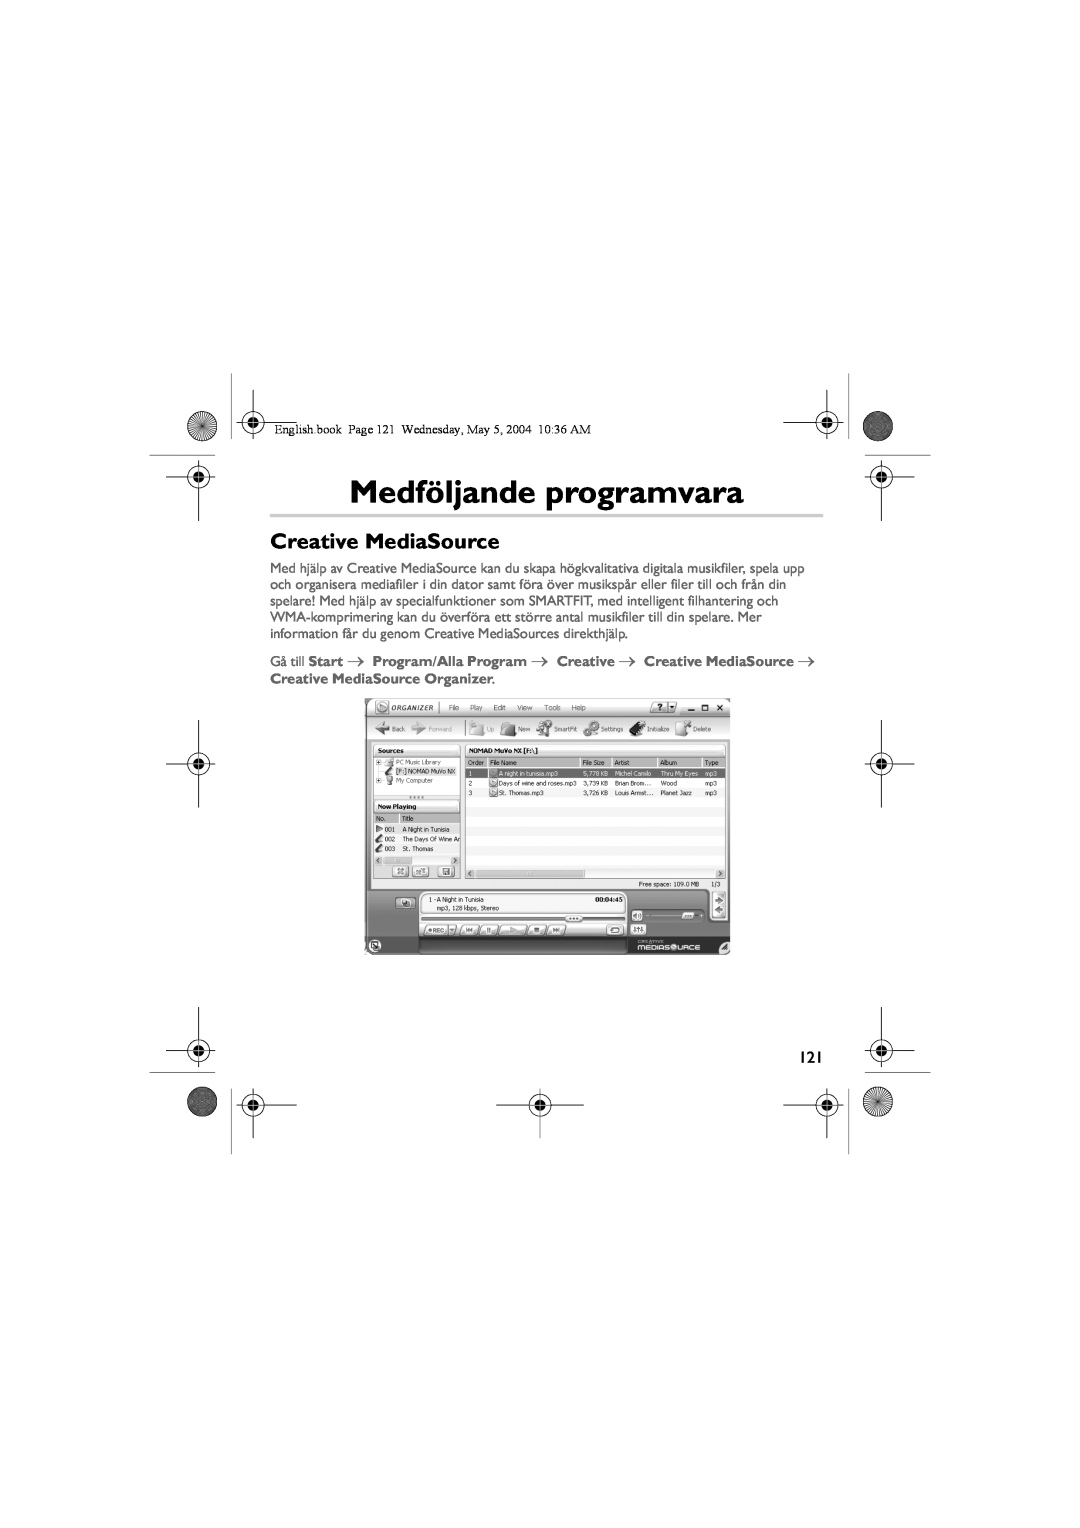 Musica CD Player manual Medföljande programvara, Creative MediaSource, English.book Page 121 Wednesday, May 5, 2004 1036 AM 